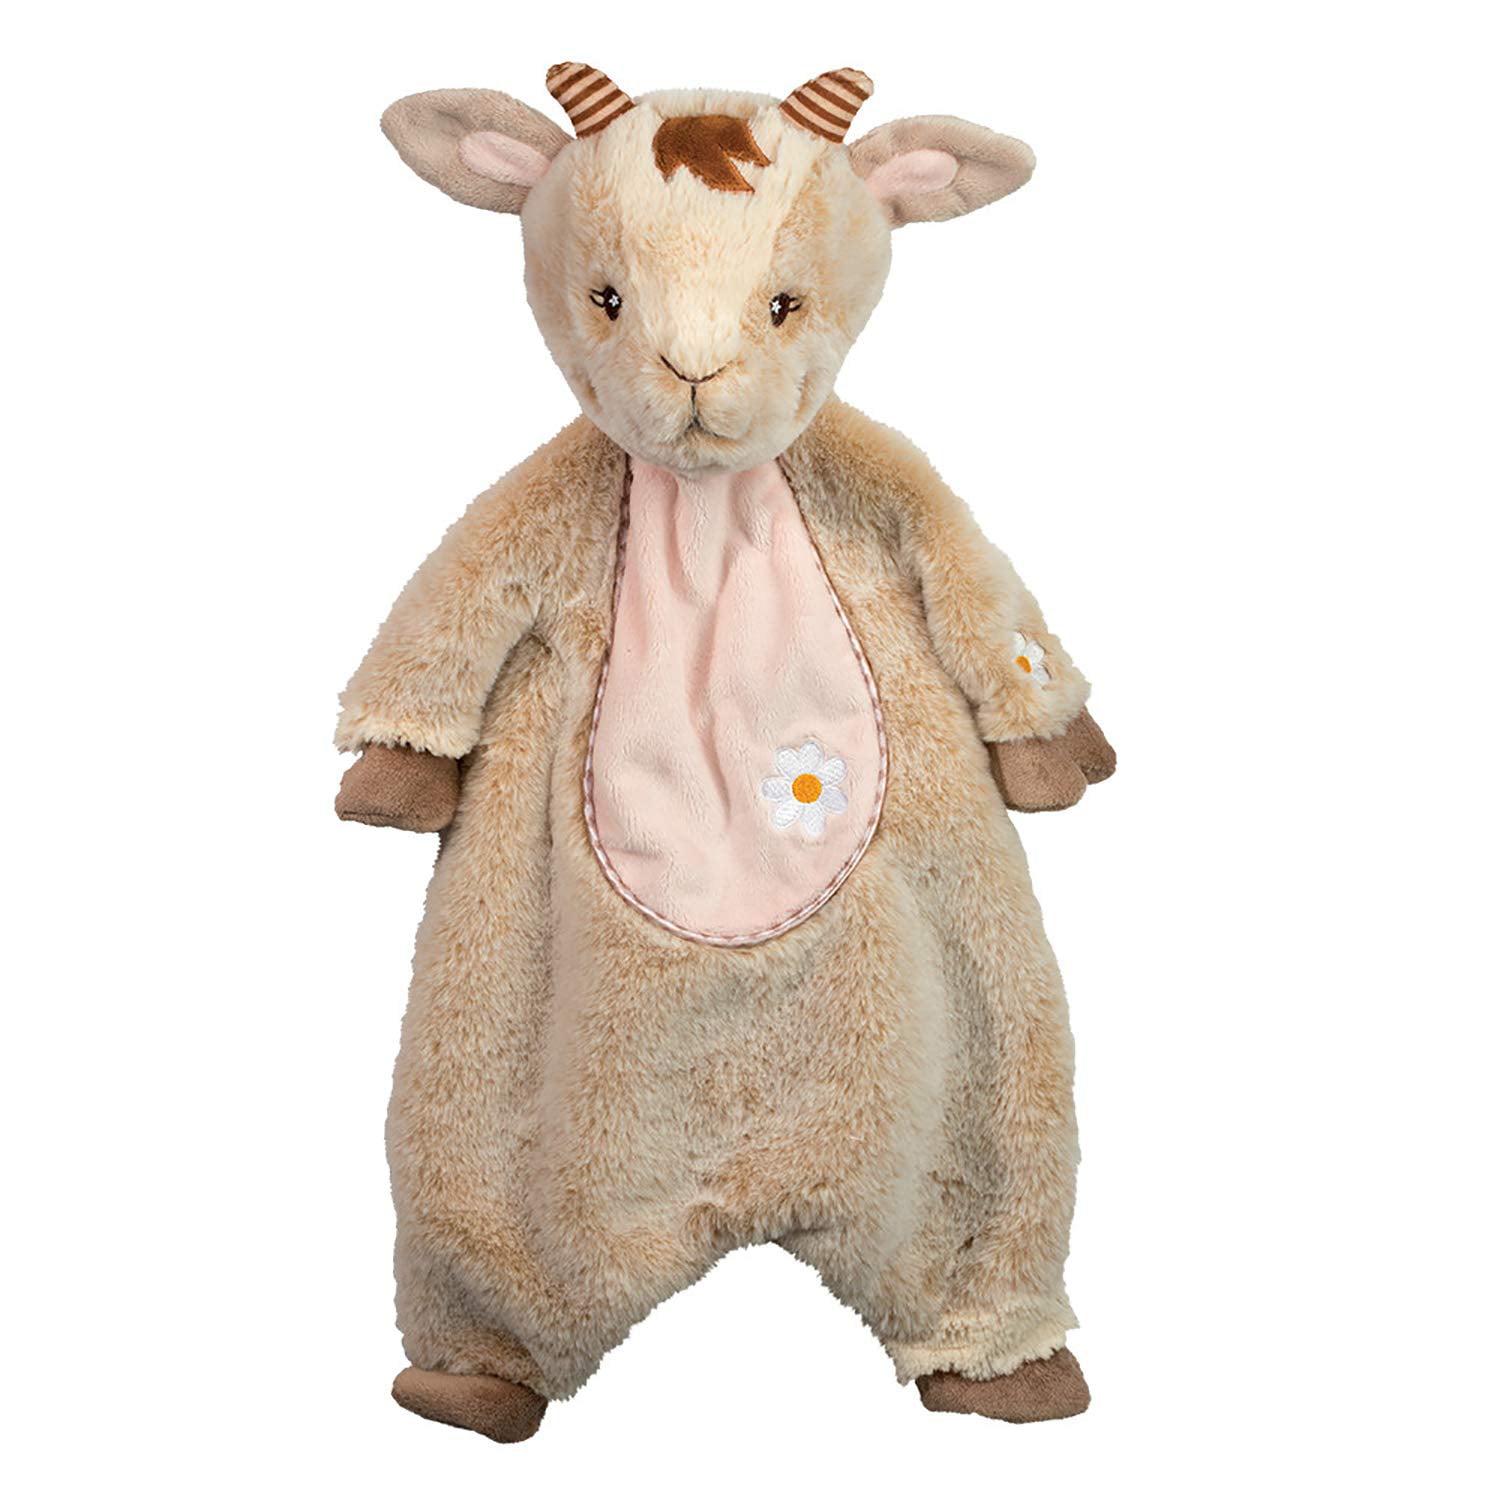 Baby DAISY GOAT Plush SNUGGLER Stuffed Animal #1436 by Douglas Cuddle Toys 